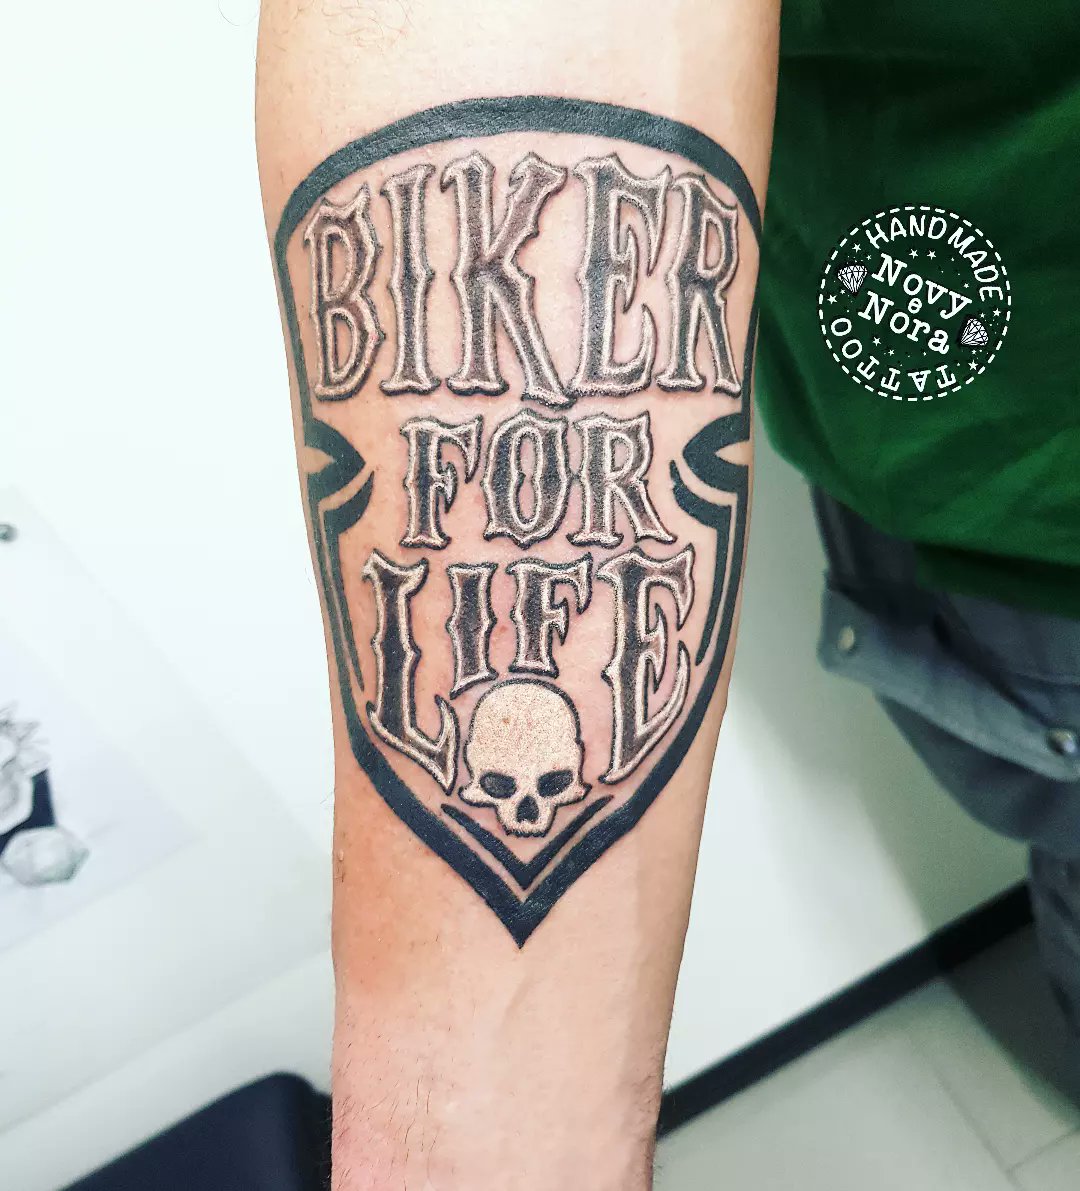 Discover more than 187 biker tattoo designs